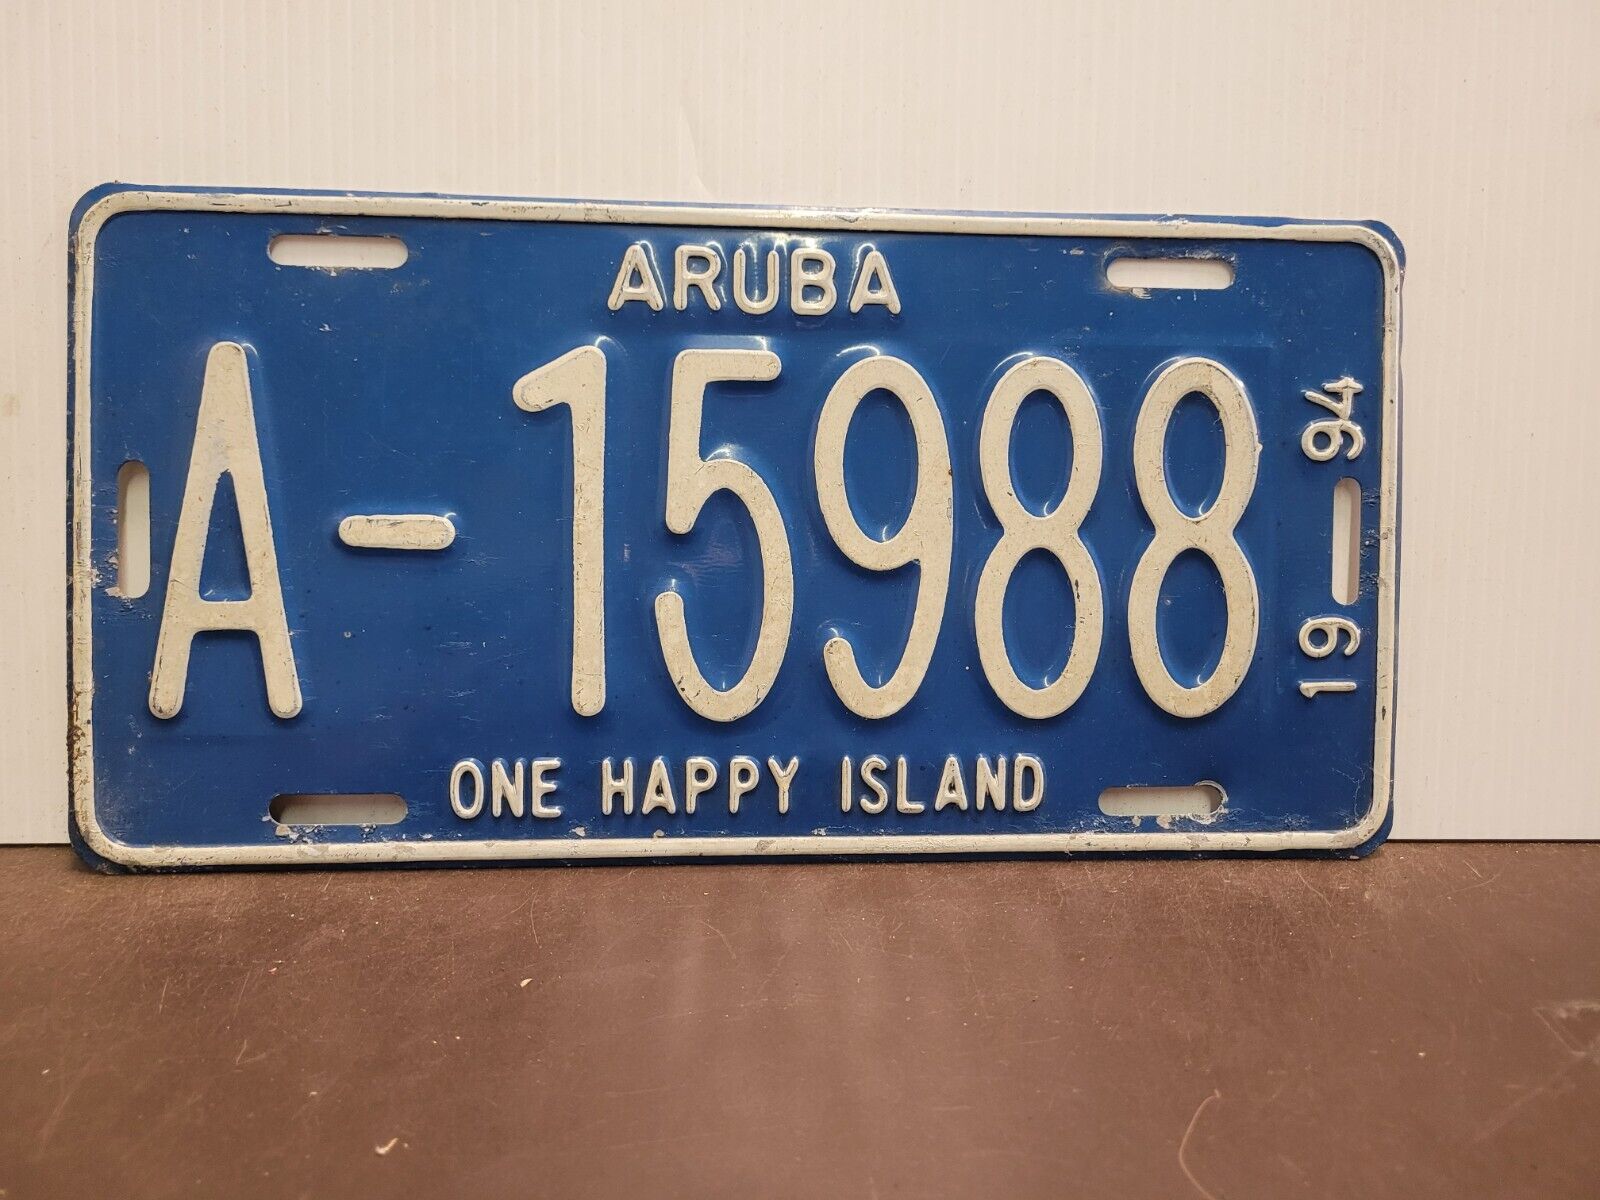 1994 Aruba Netherlands Antilles License Plate Tag Original.